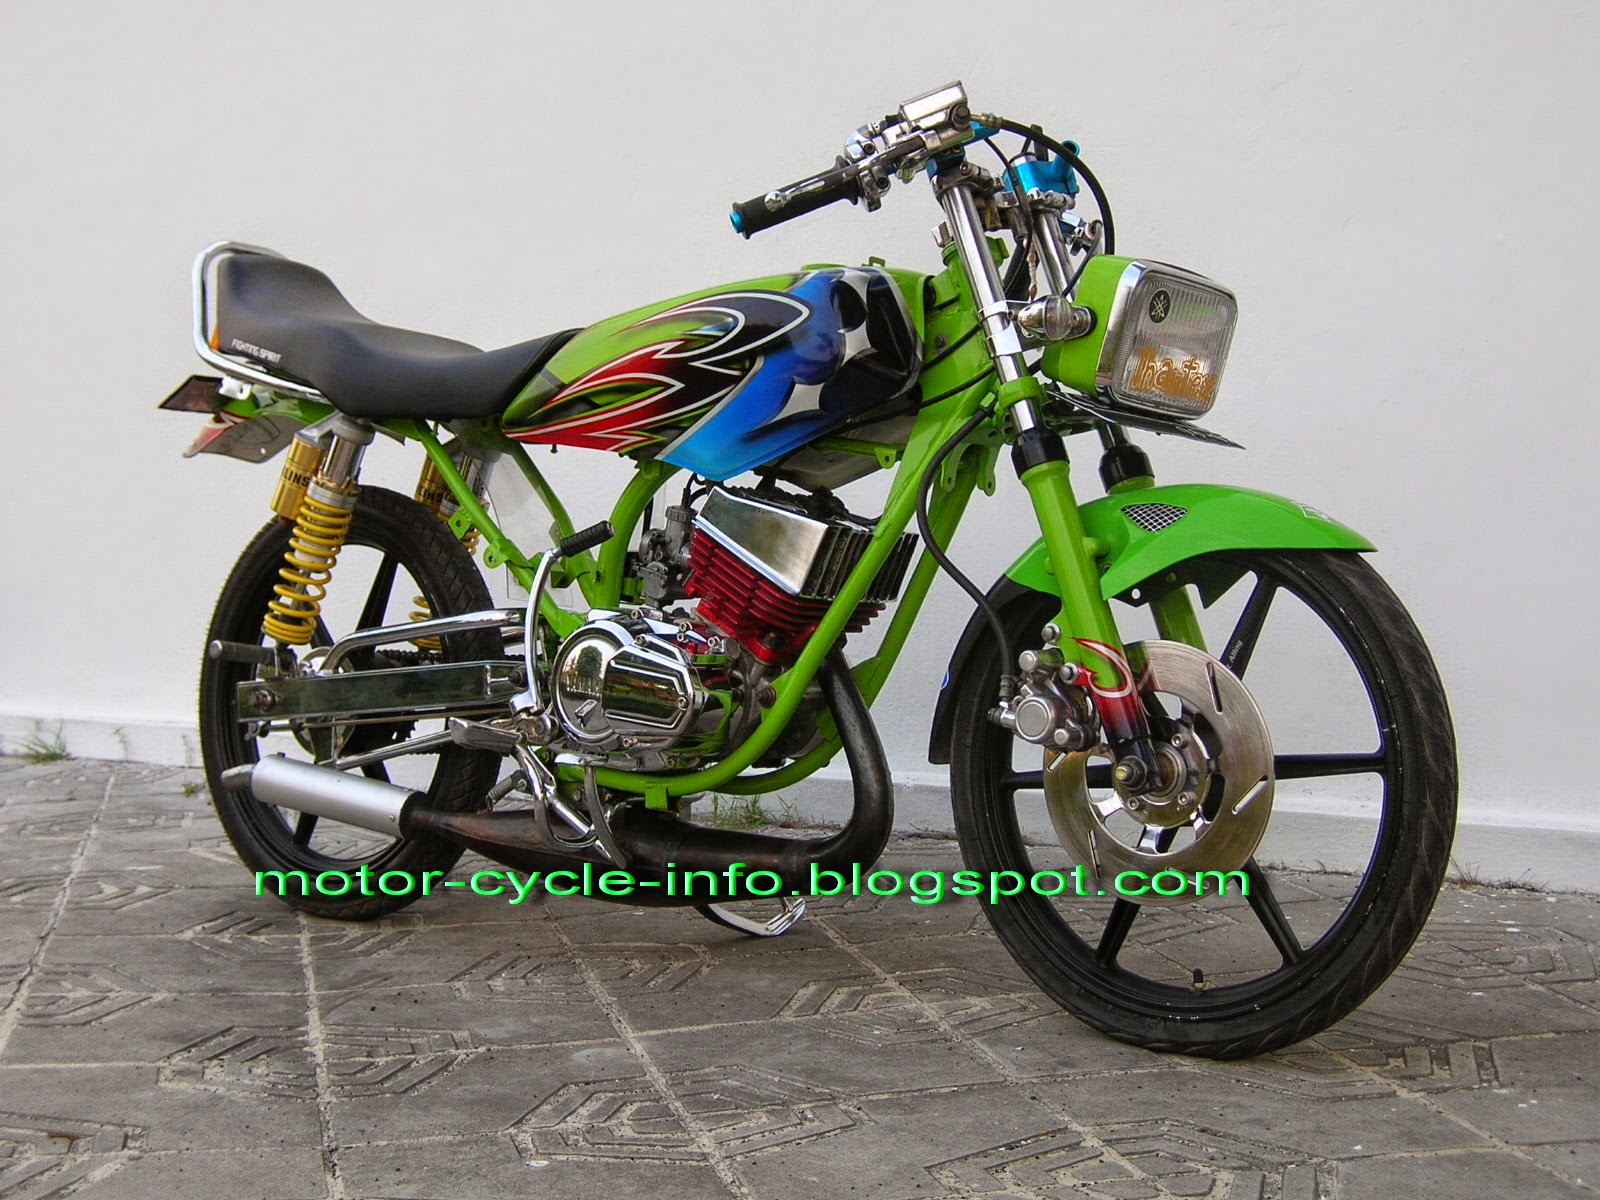 Kawasaki D Tracker Modifikasi Supermoto - Thecitycyclist